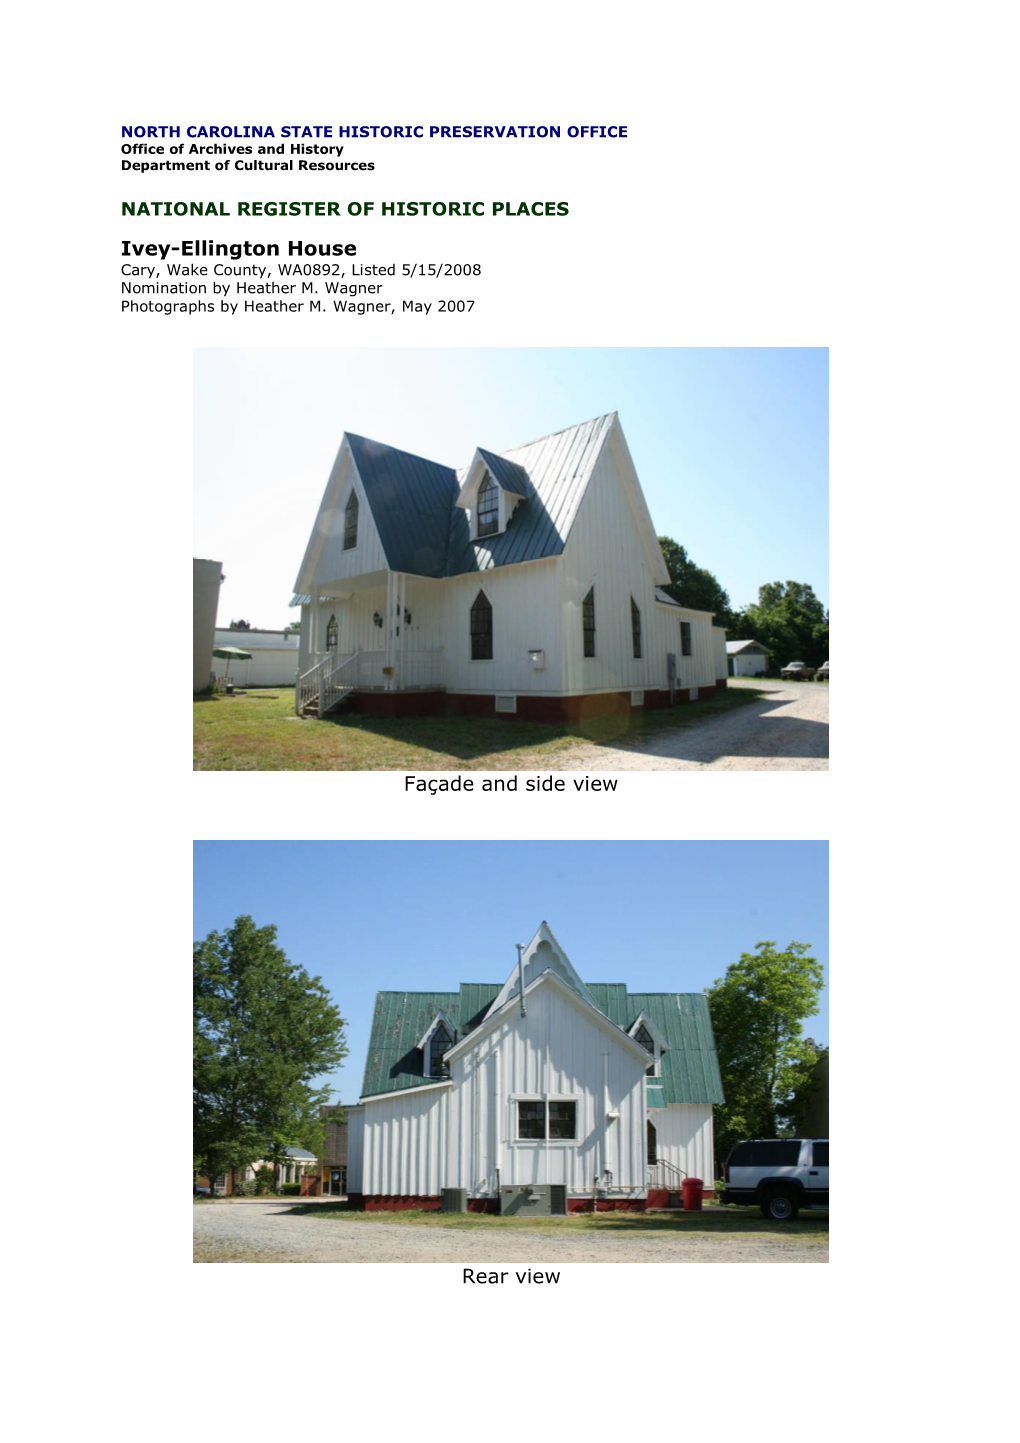 Ivey-Ellington House Cary, Wake County, WA0892, Listed 5/15/2008 Nomination by Heather M